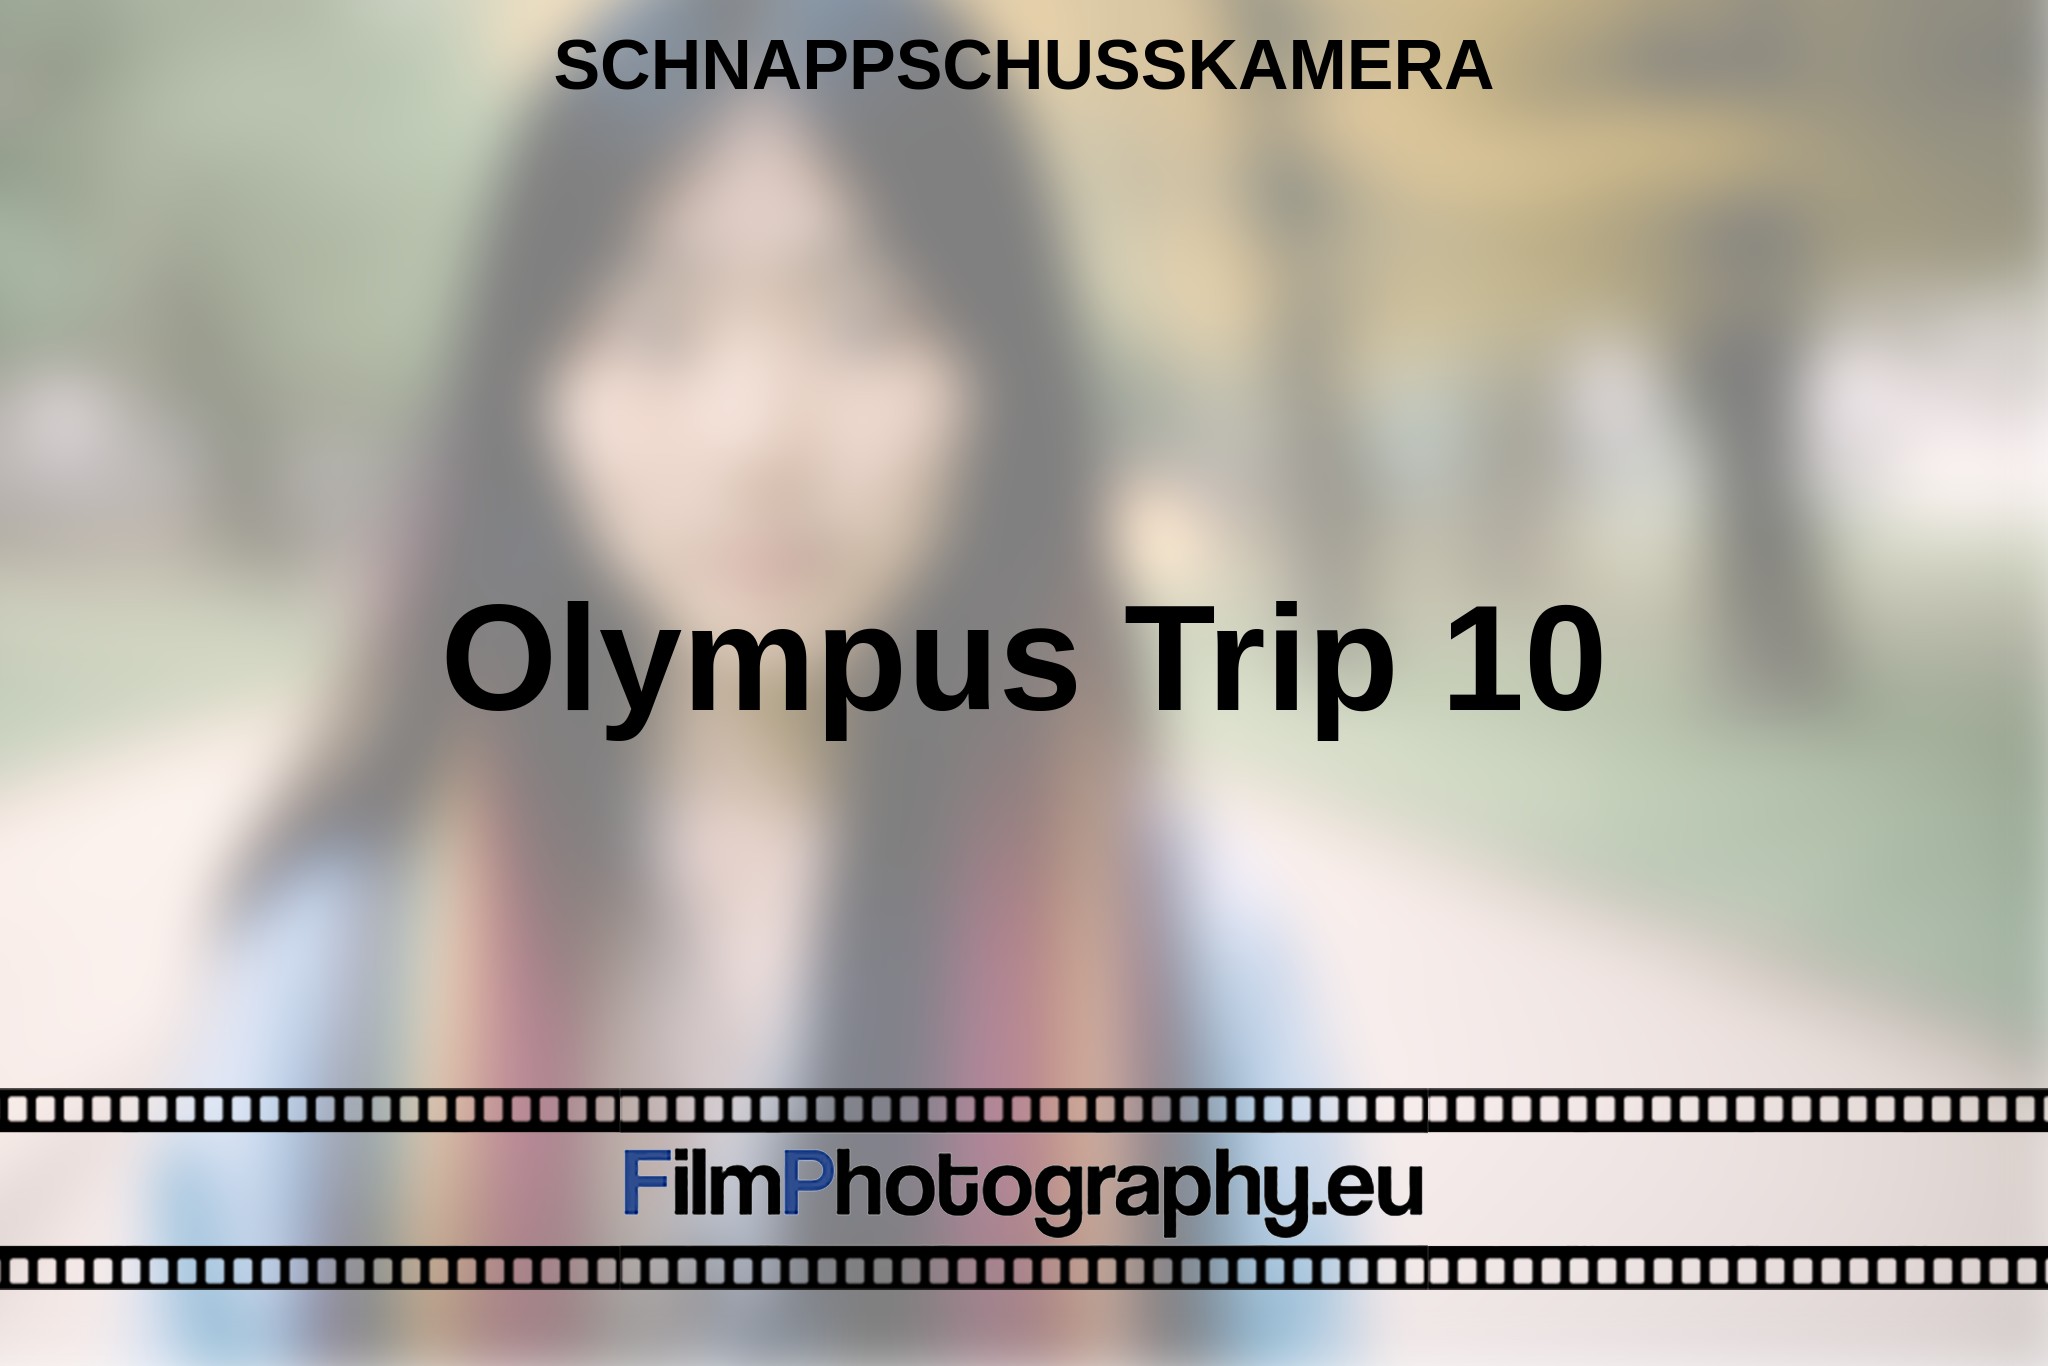 olympus-trip-10-schnappschusskamera-bnv.jpg